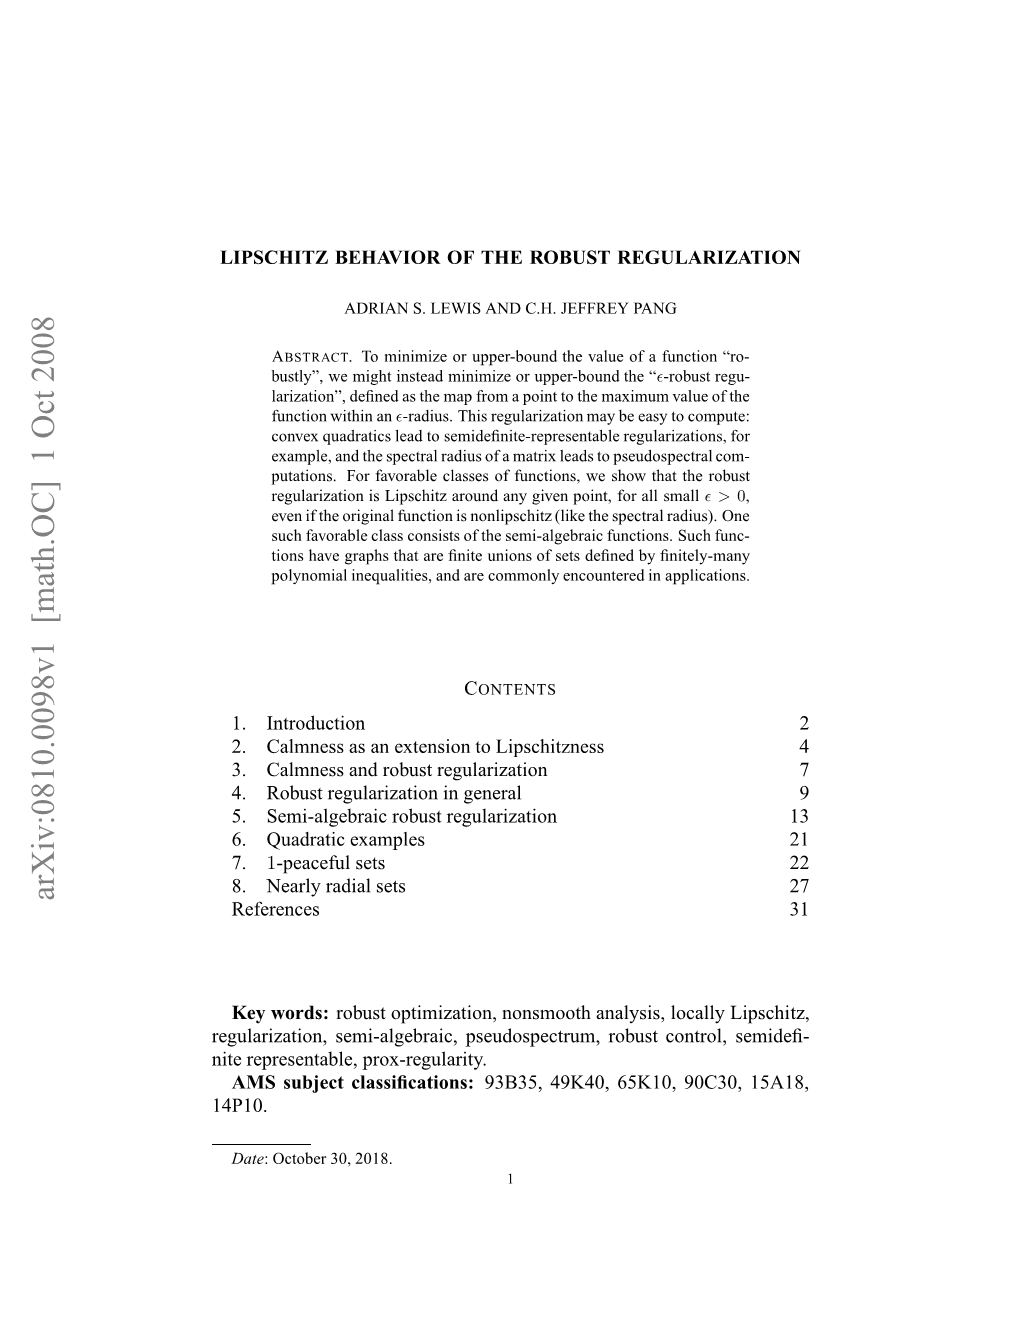 Lipschitz Behavior of the Robust Regularization